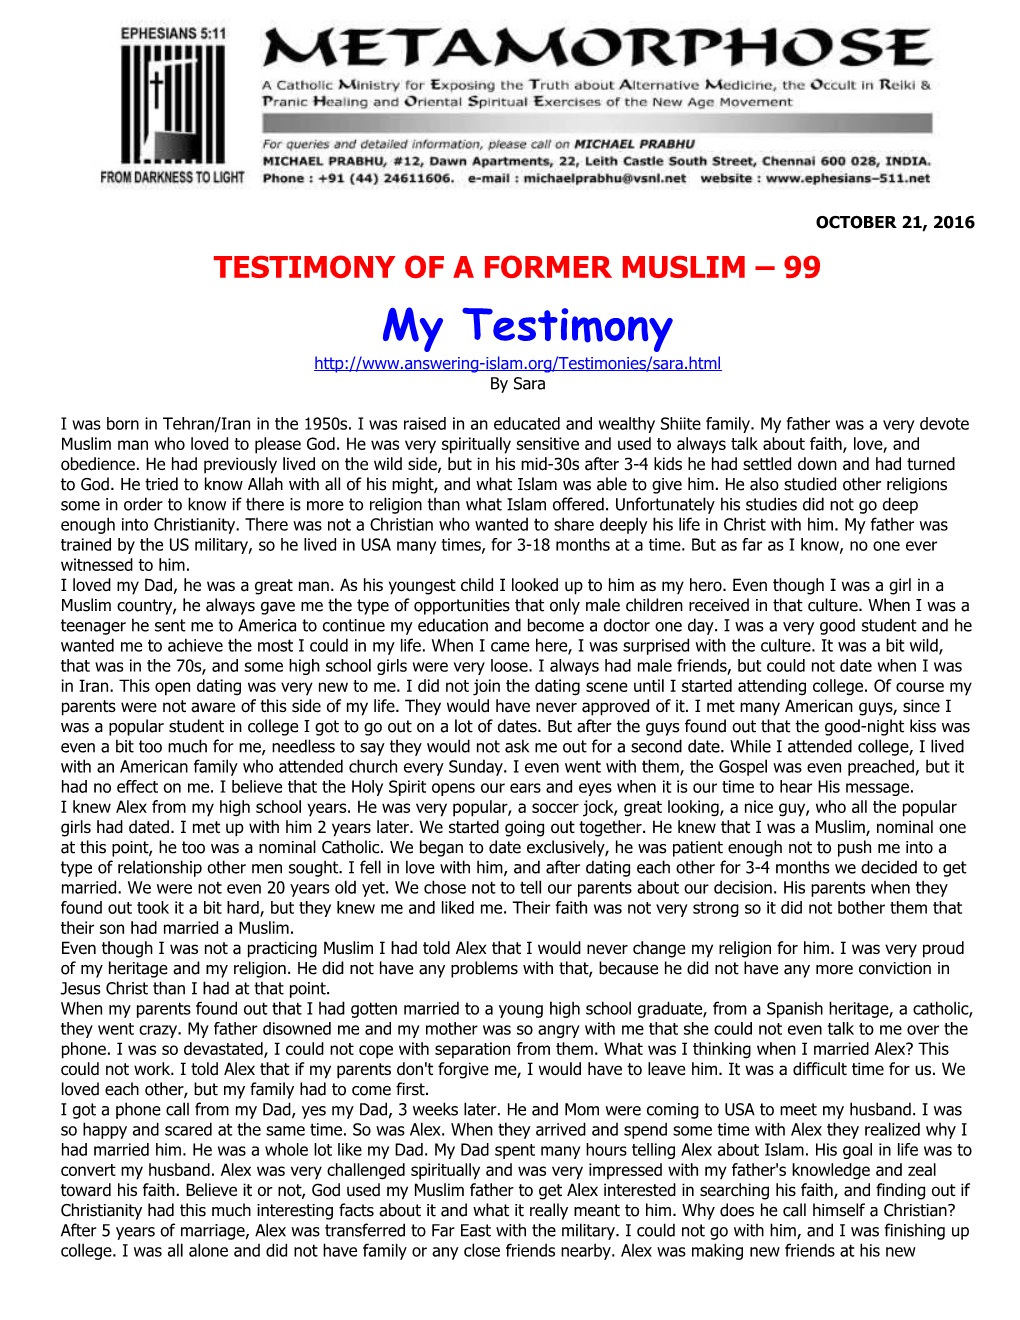 Testimony of a Former Muslim 99